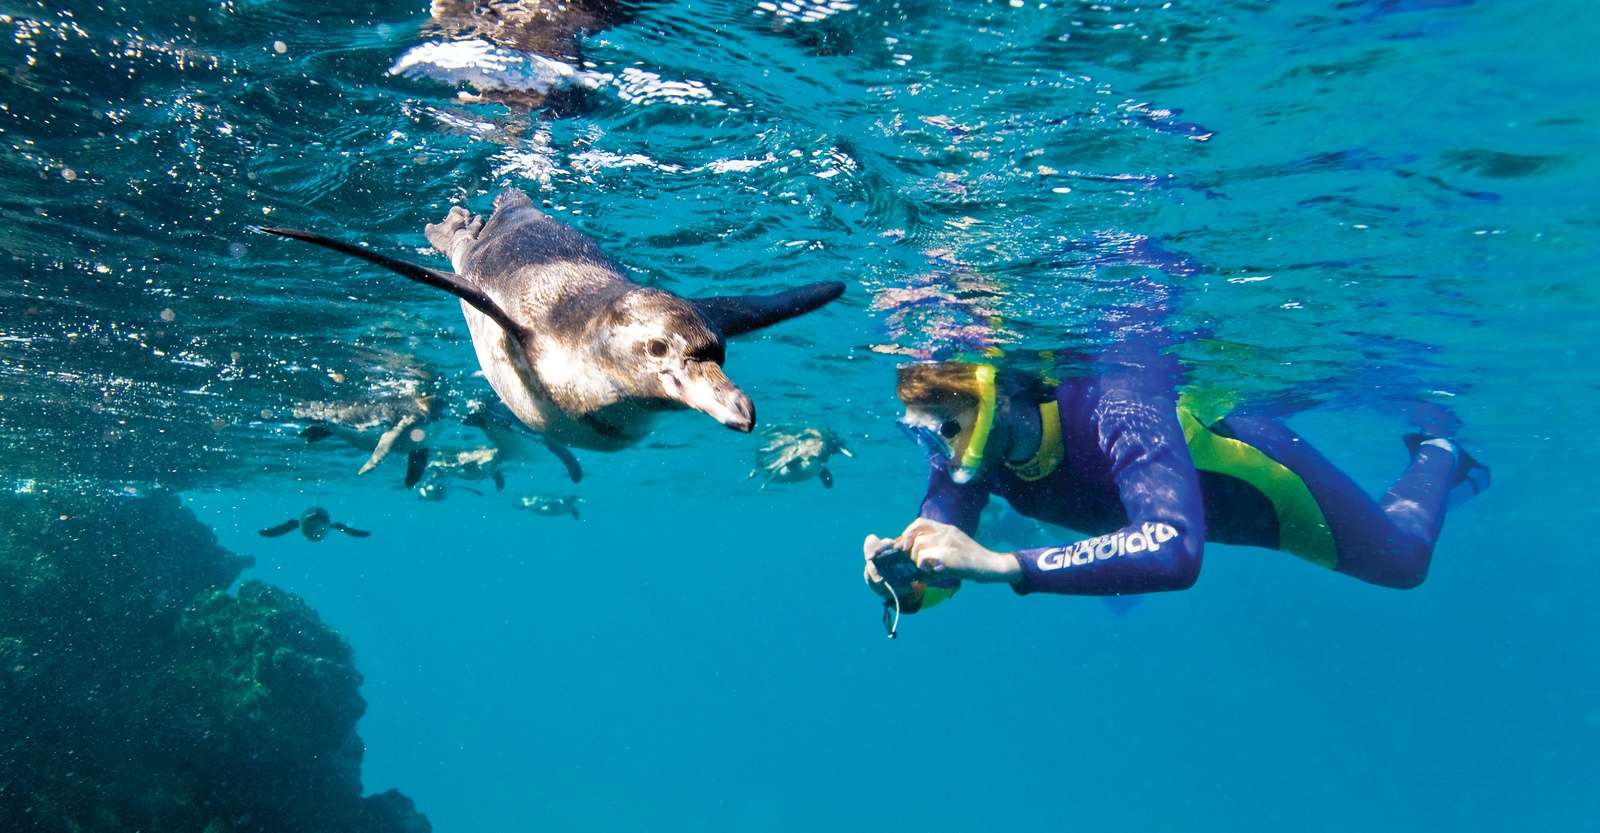 Nat Hab guest snorkeling with Galapagos penguins, Isabela Island, Galapagos, Ecuador.